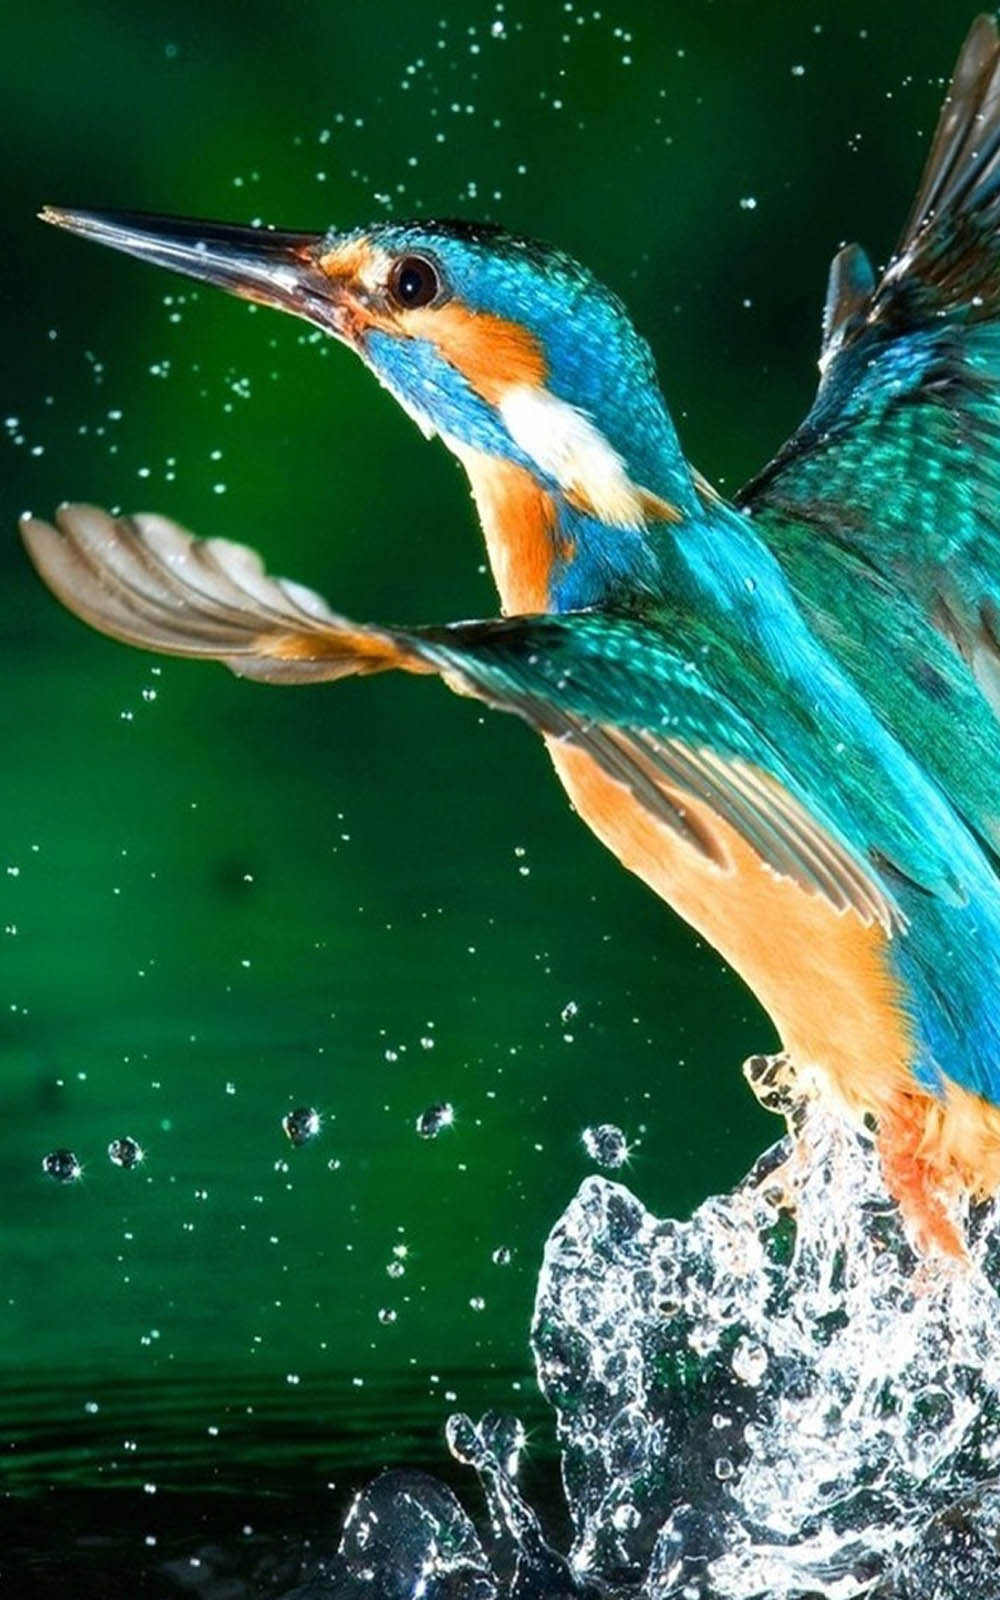 Kingfisher Bird 4K Ultra HD Mobile Wallpaper